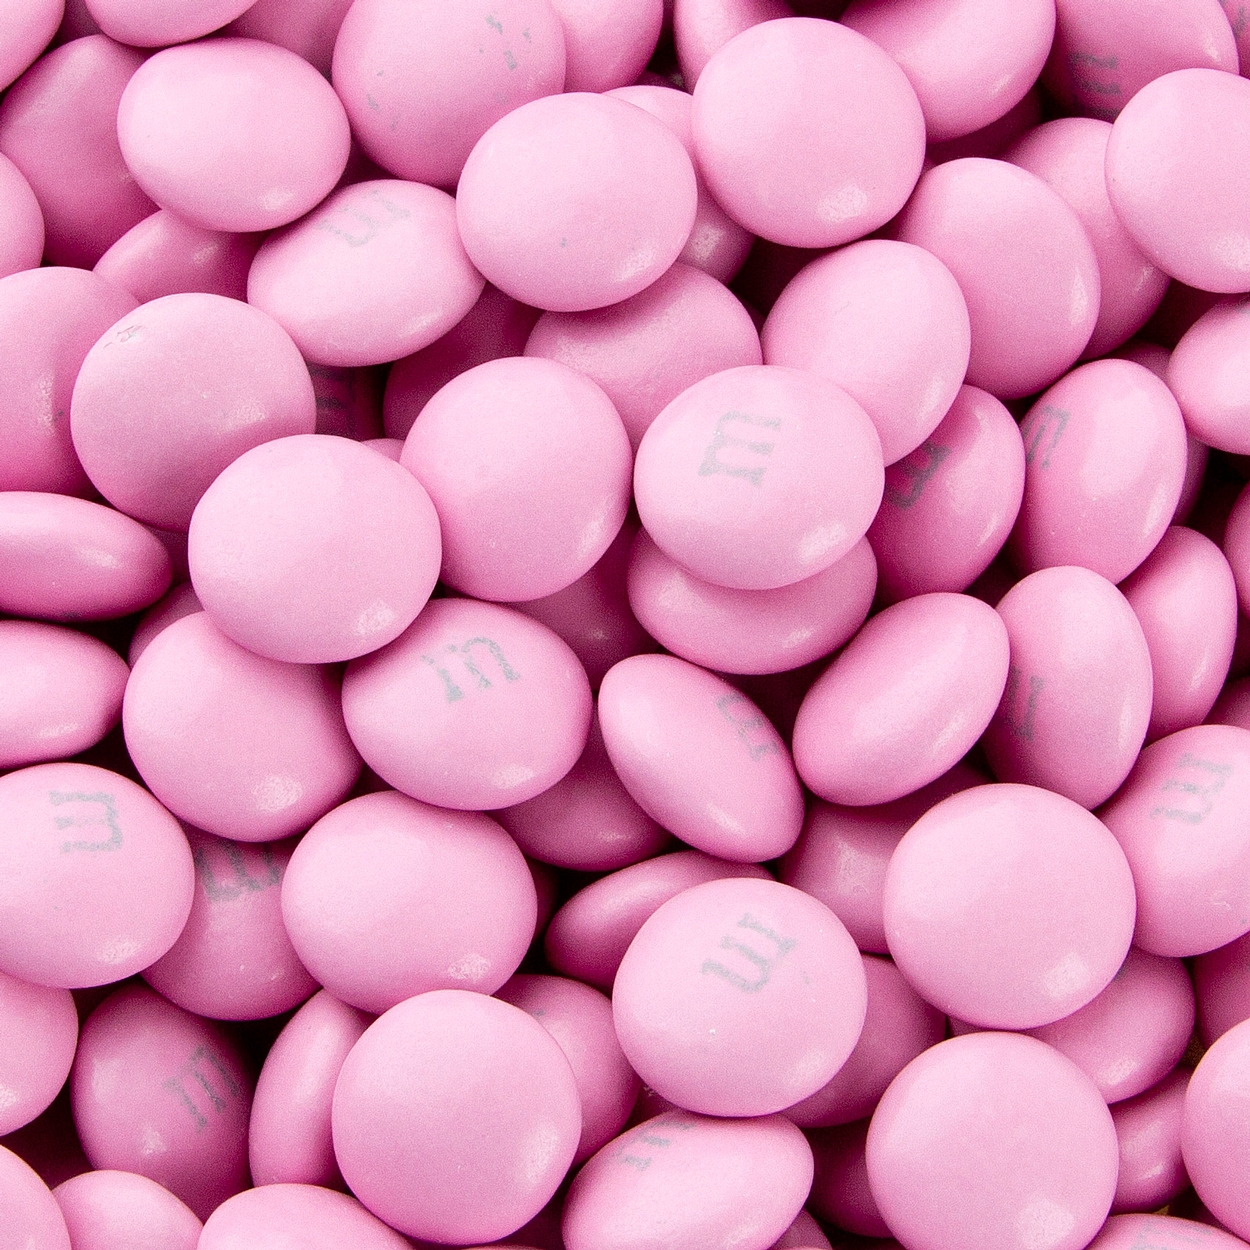 Peanut M&M'S Pink Candy